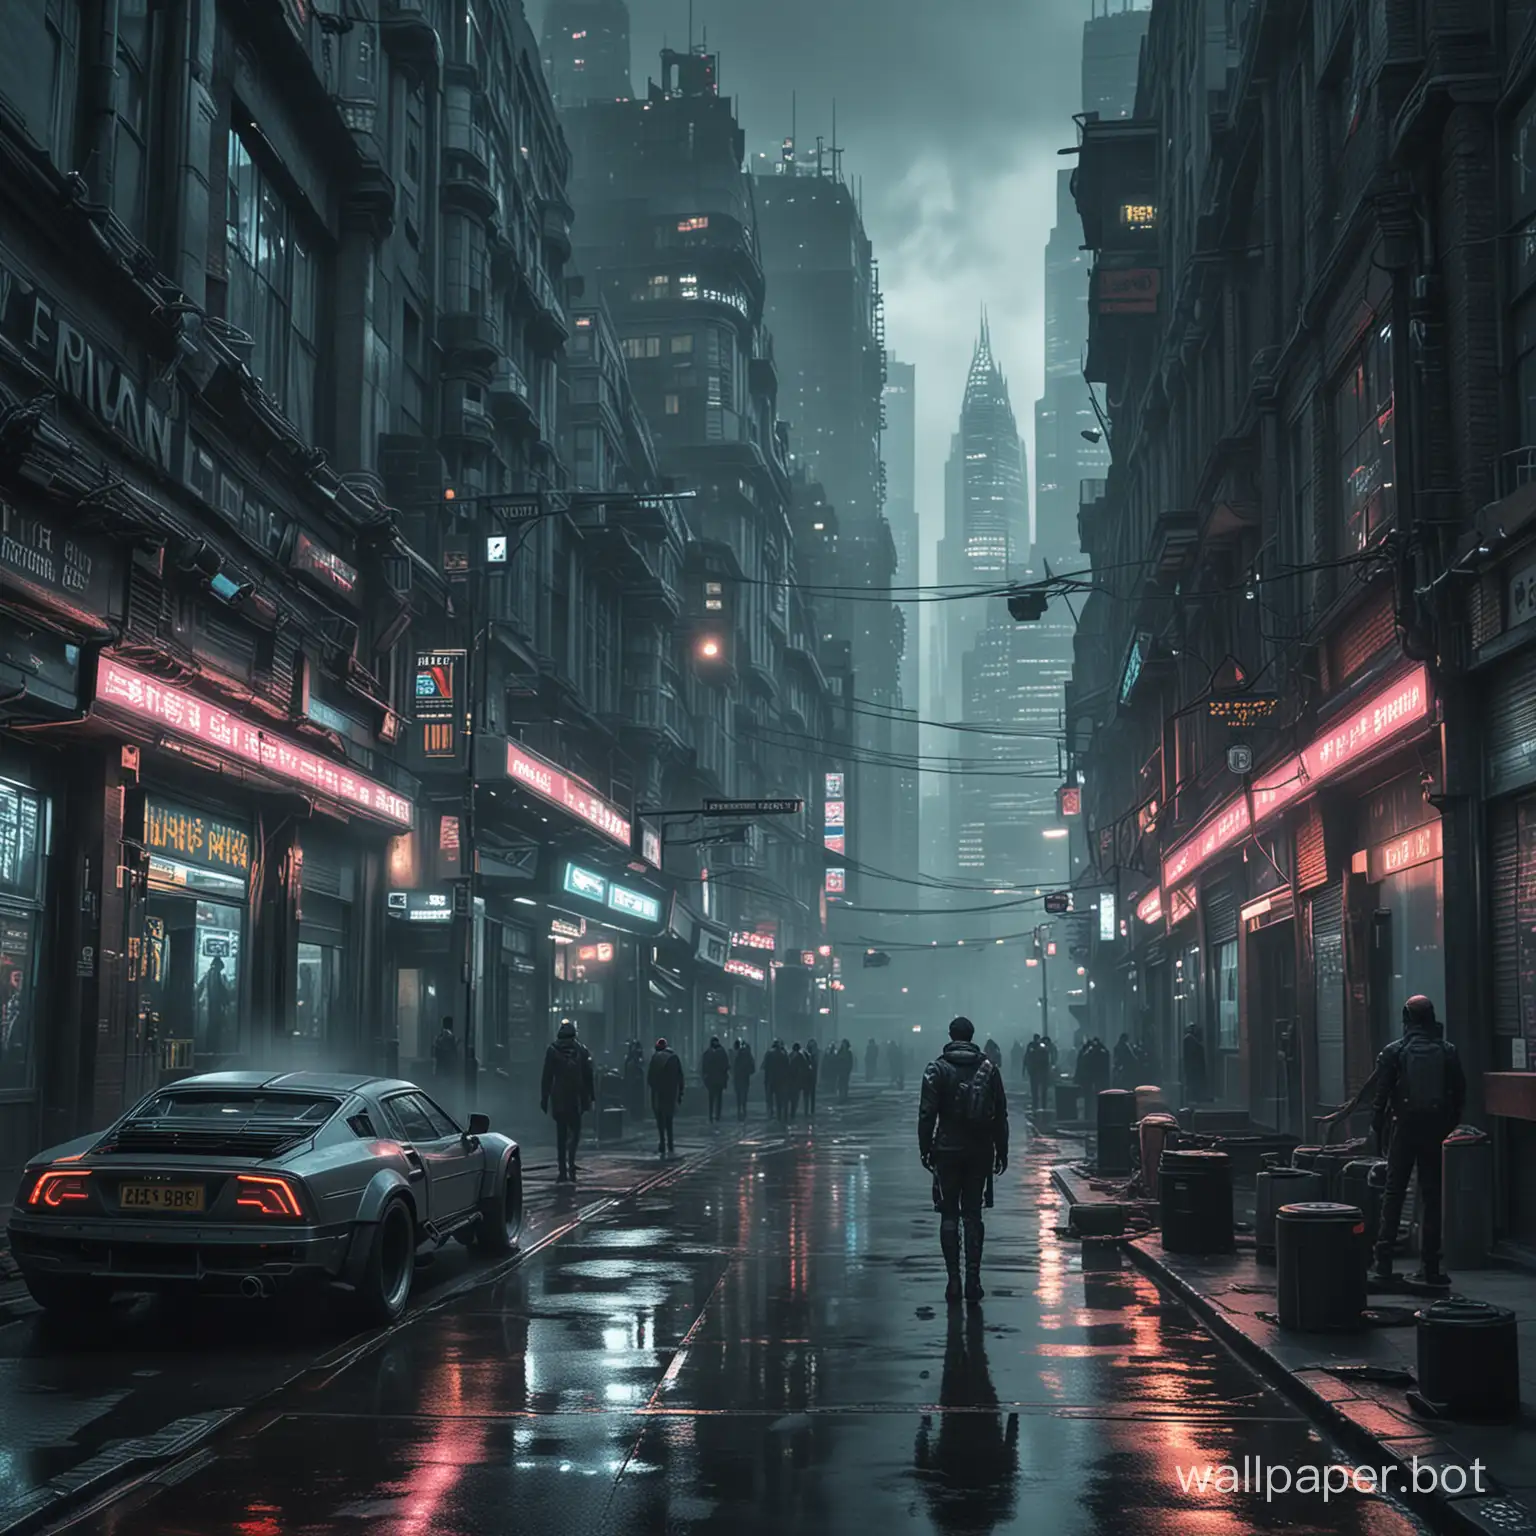 Futuristic-Cyberpunk-London-Cityscape-at-Night